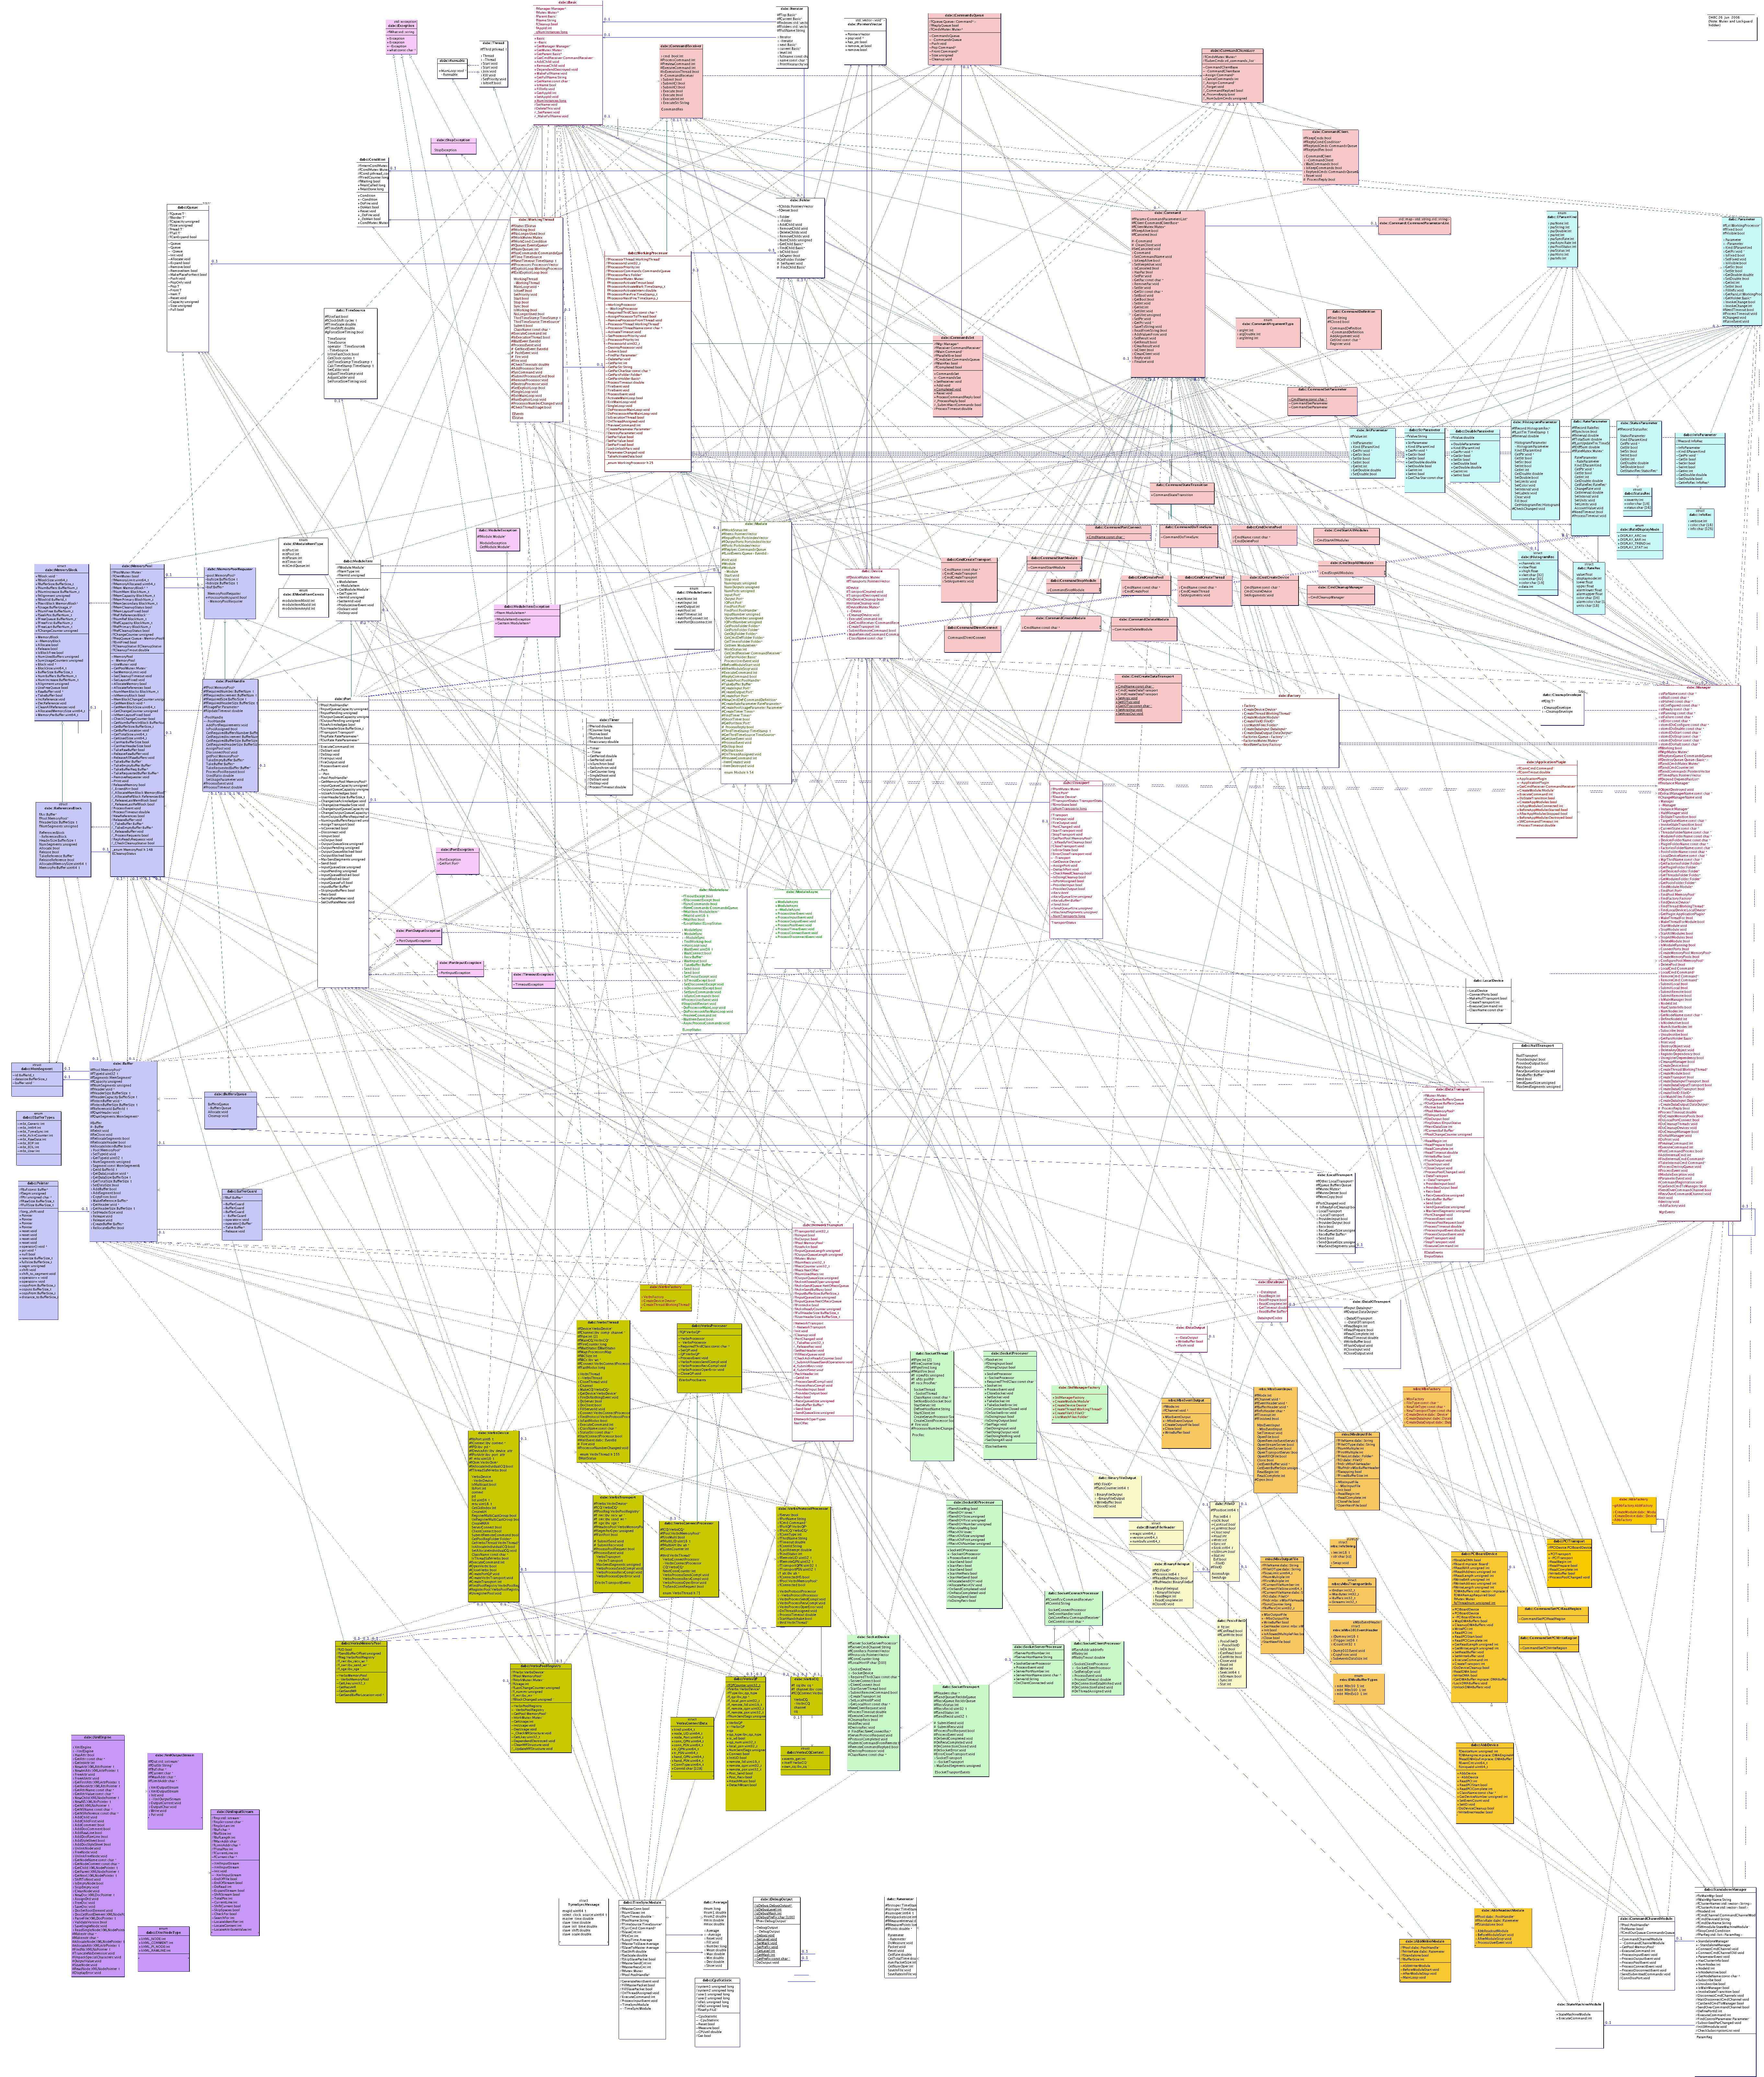 Class diagram of dabc core system, full resolution (26.06.2008)